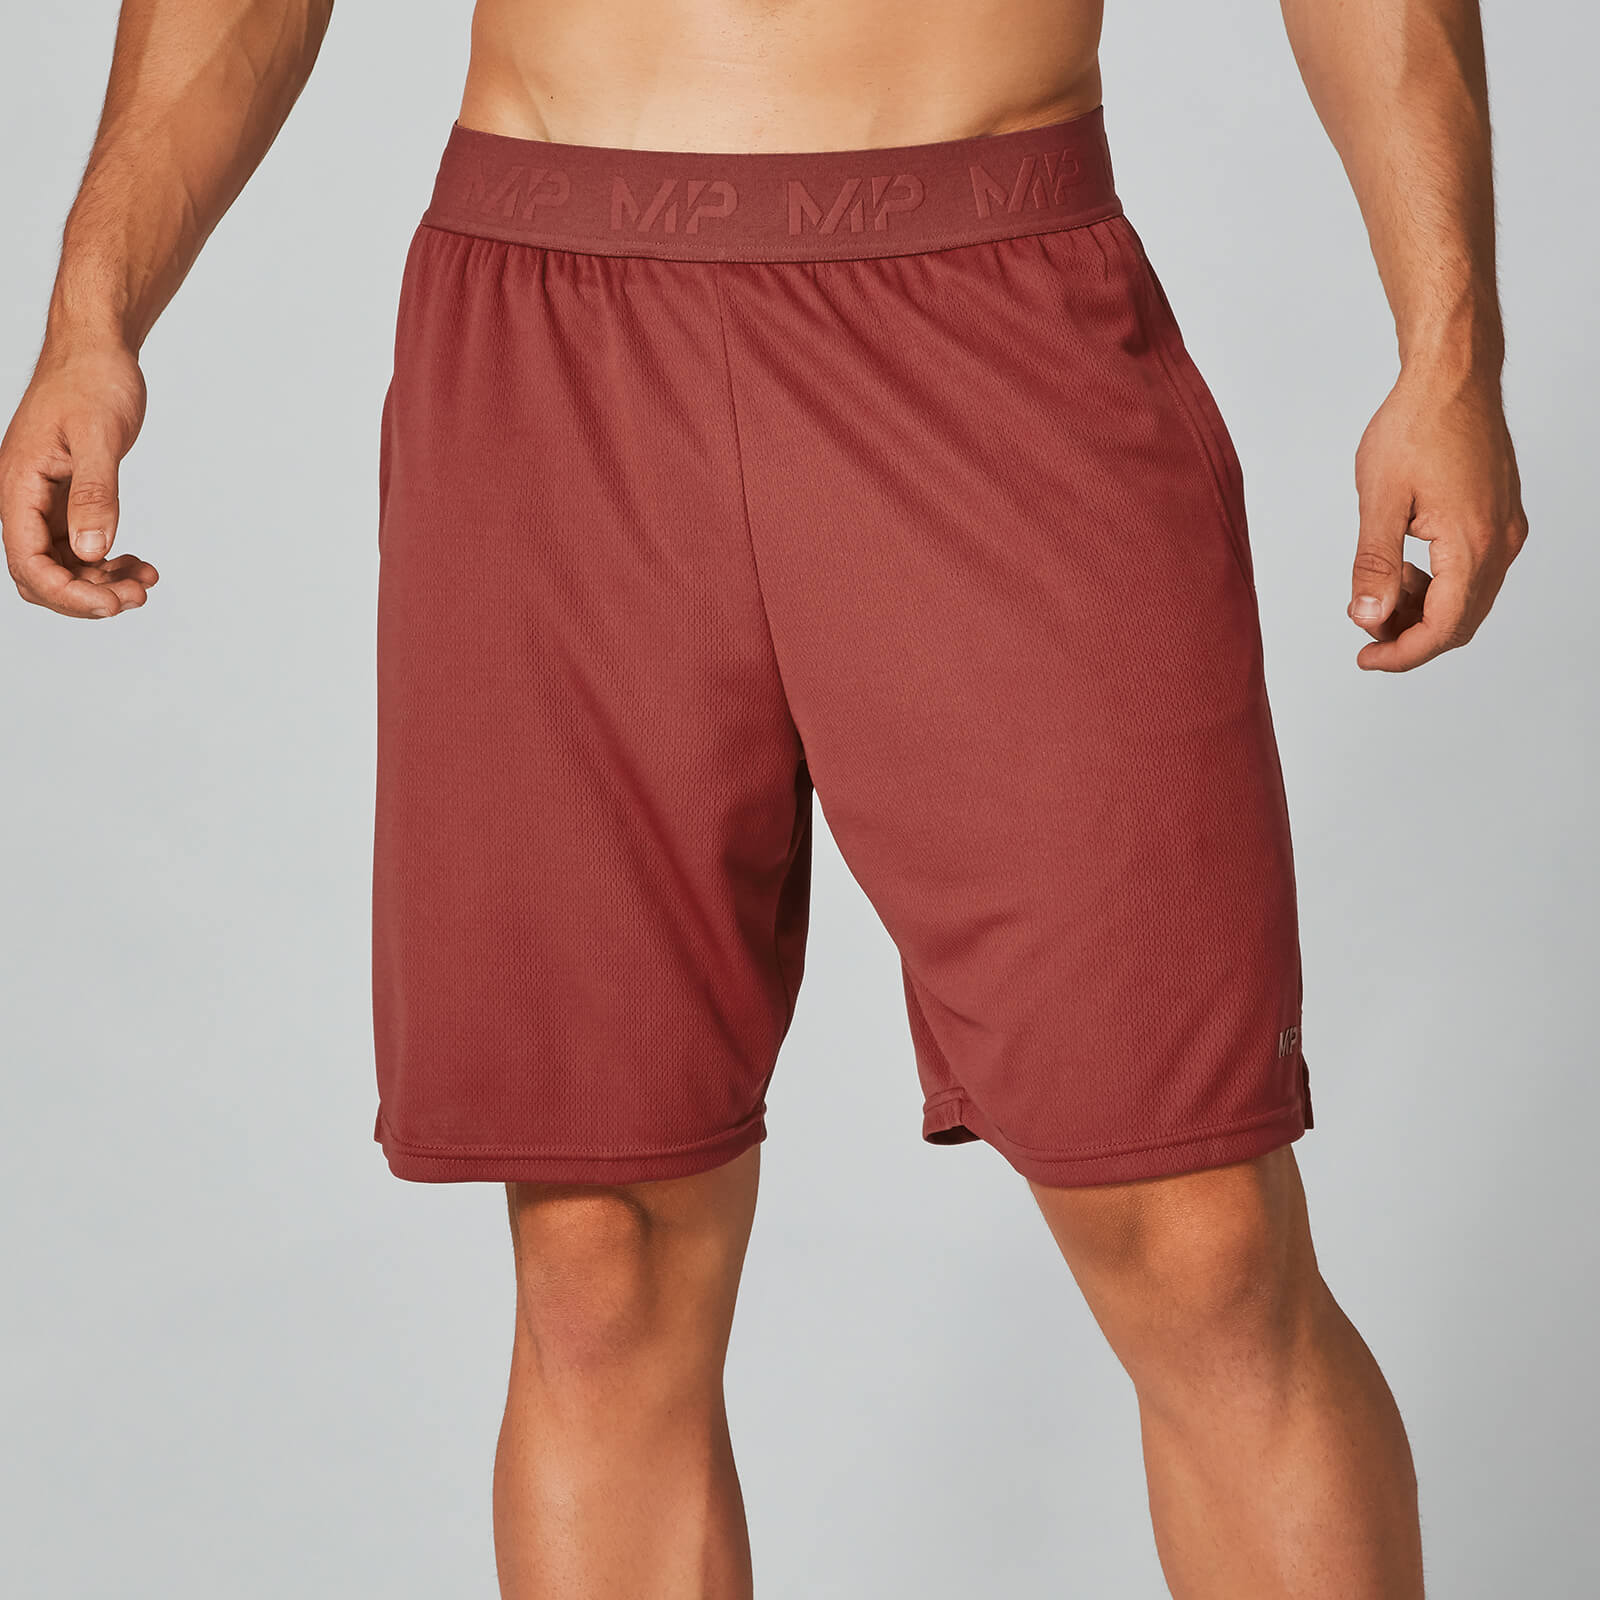 Dry-Tech Jersey Shorts - Paprika Red - XS